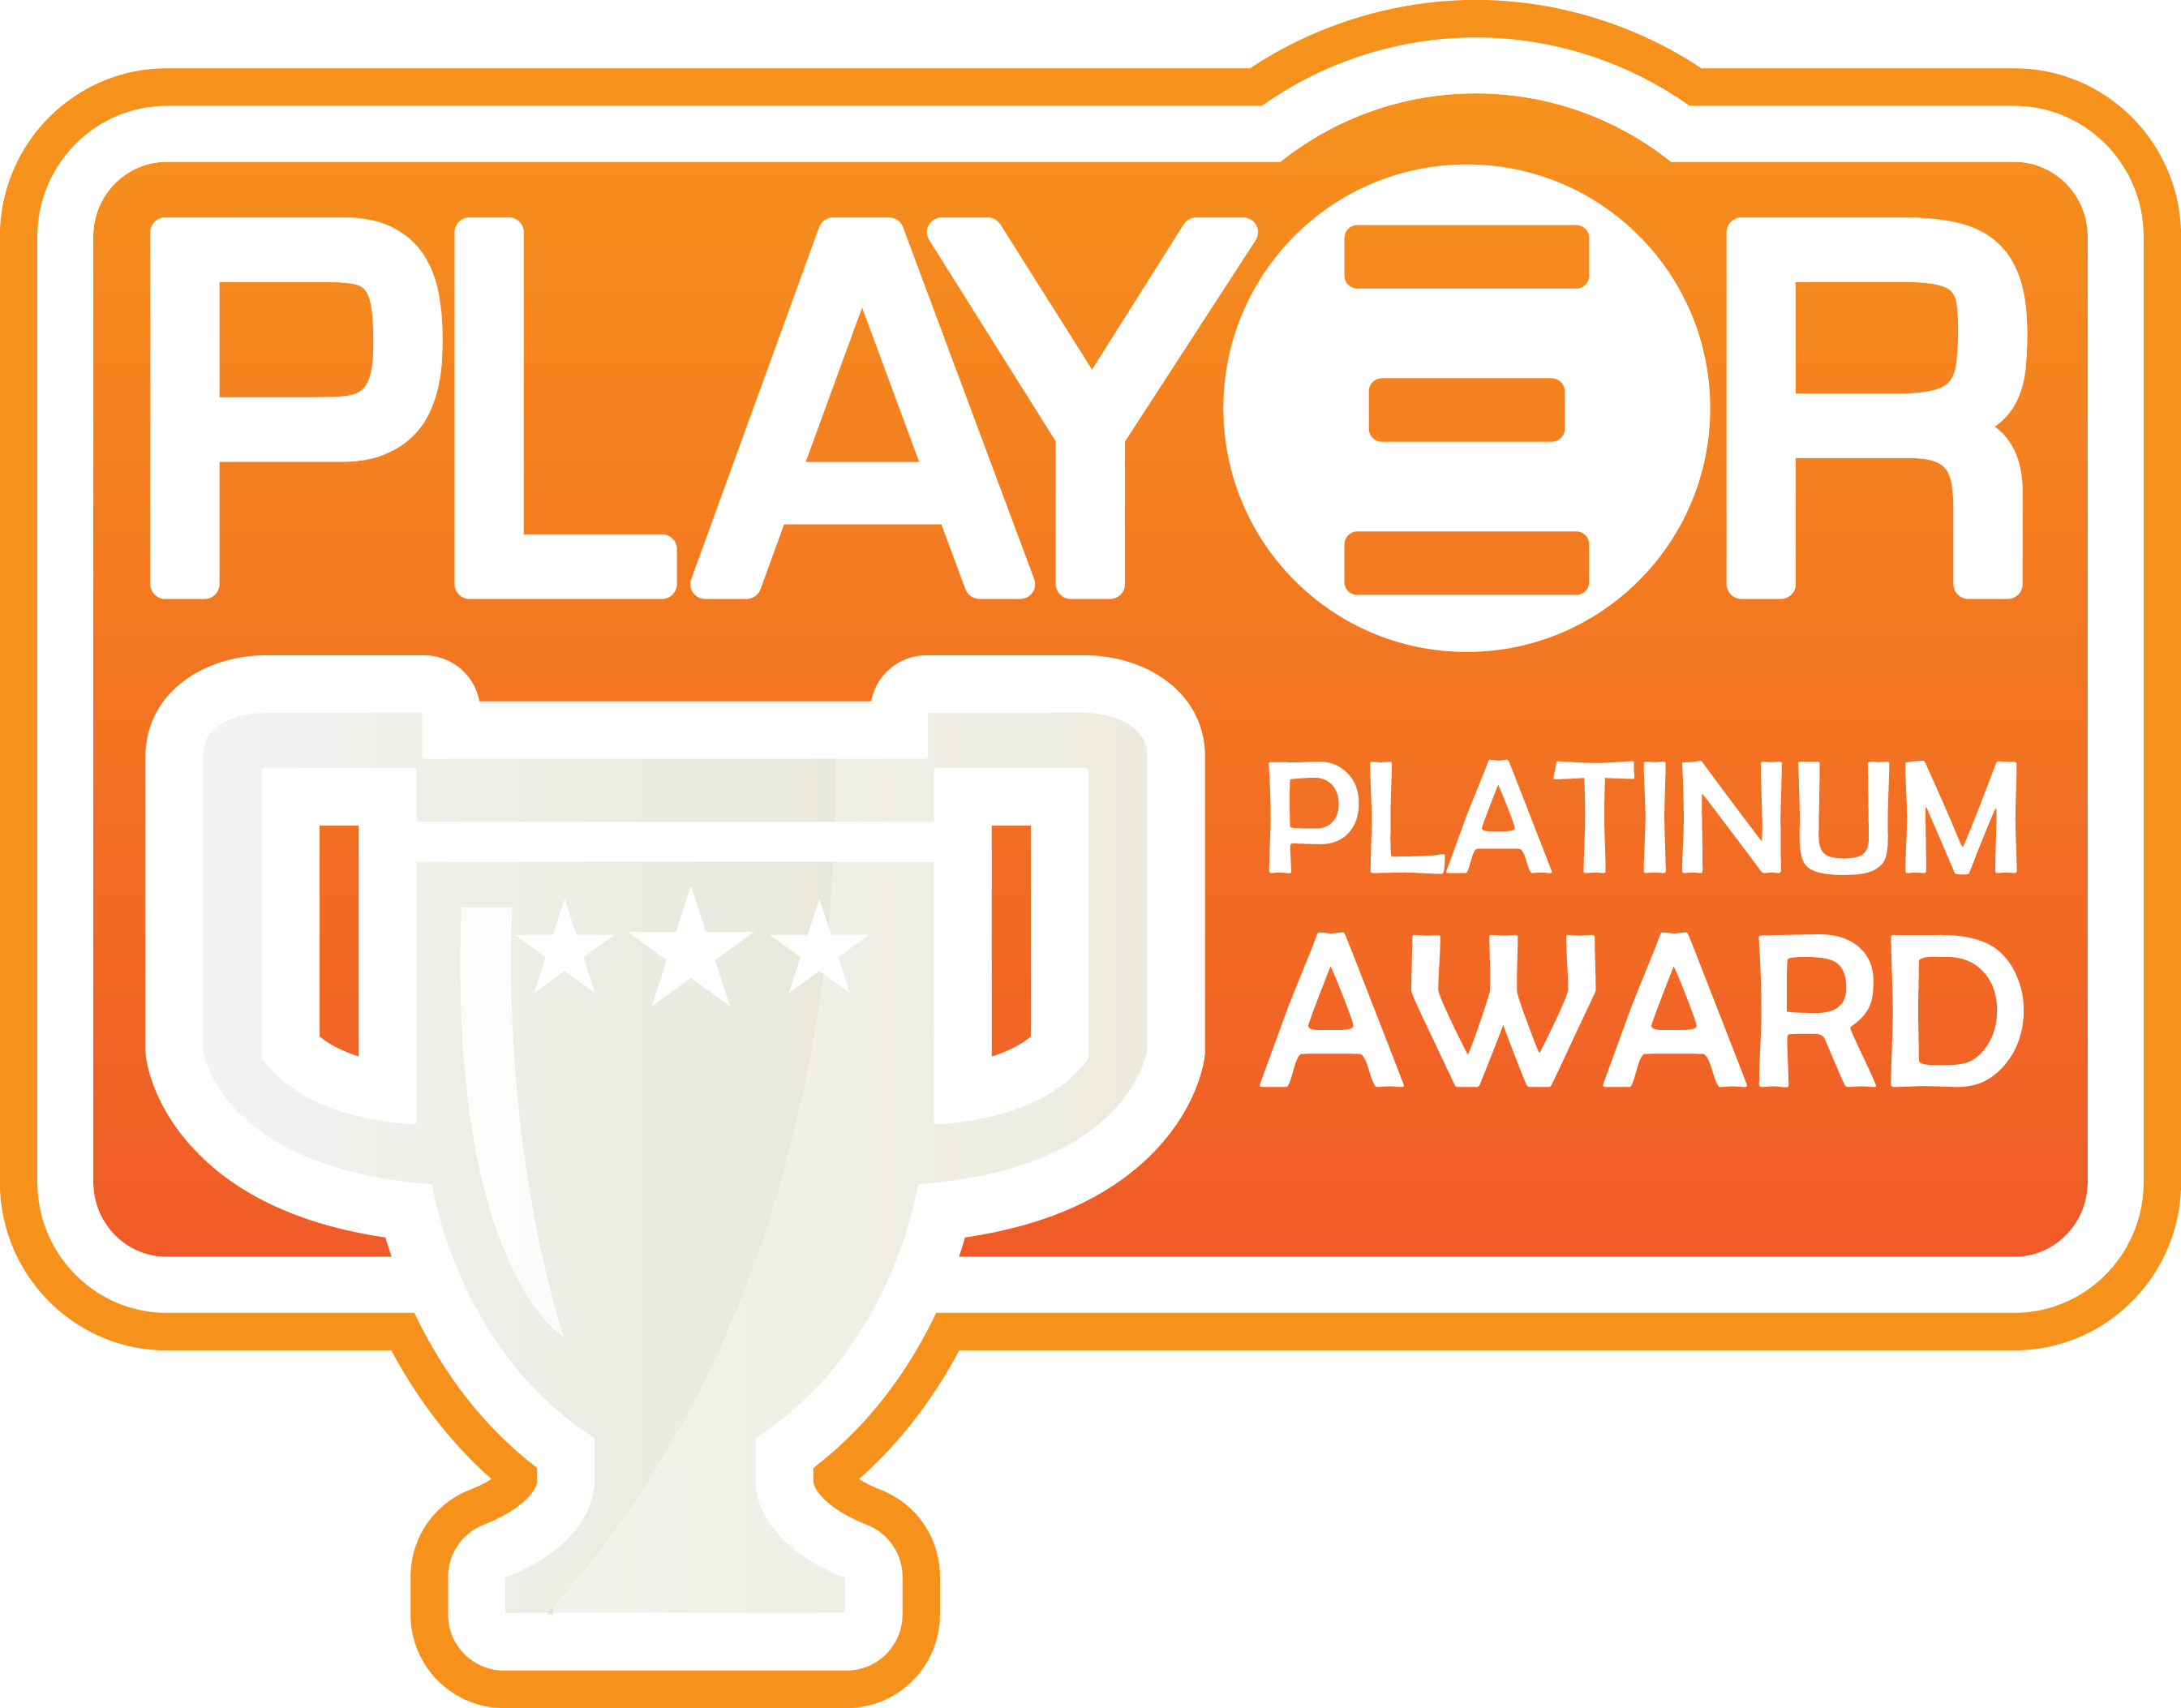 Platinum Award - Play3r